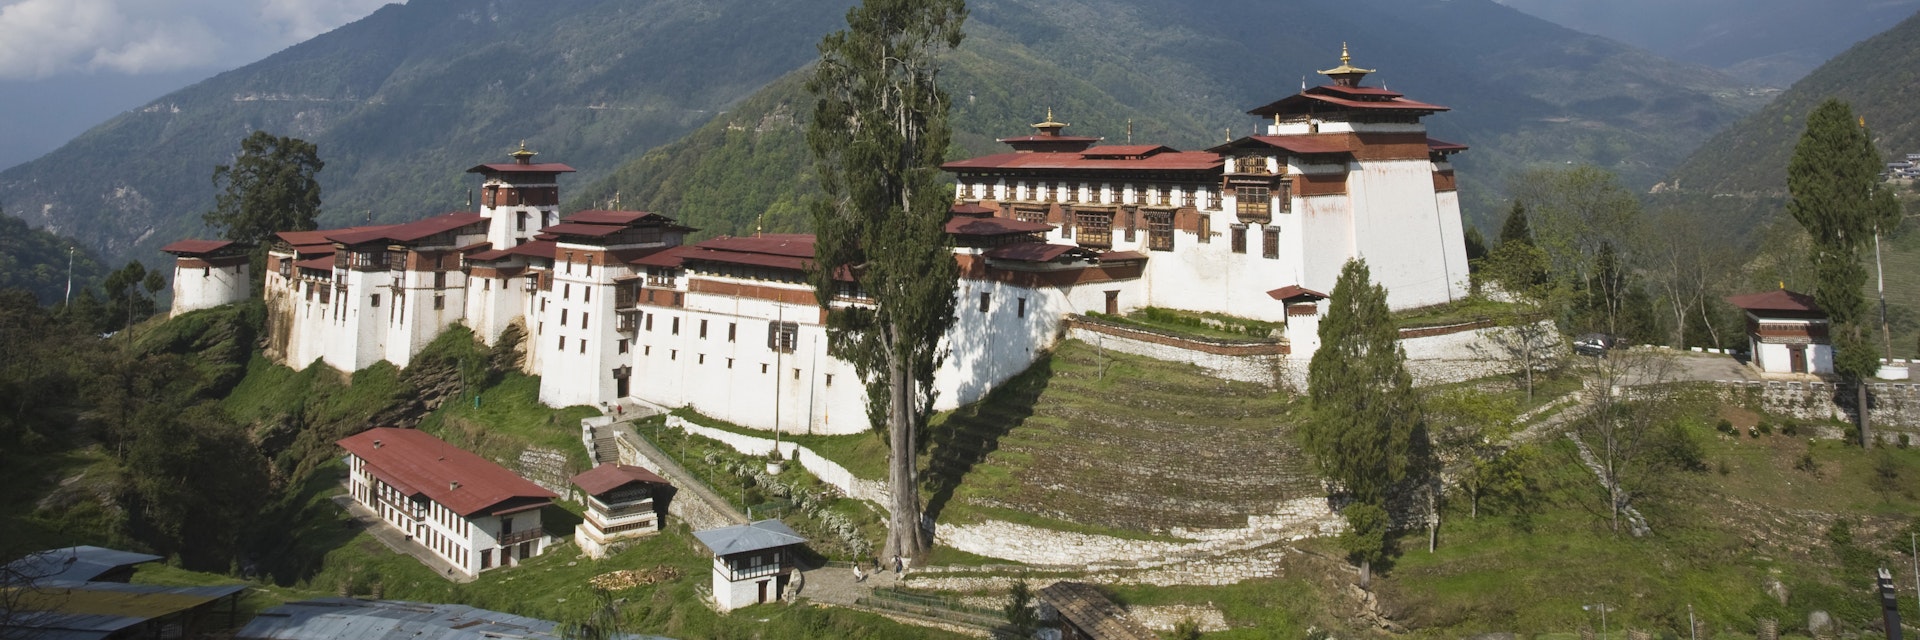 Scenic view of the Trongsa District, Trongsa Dzong, Trongsa, Bhutan